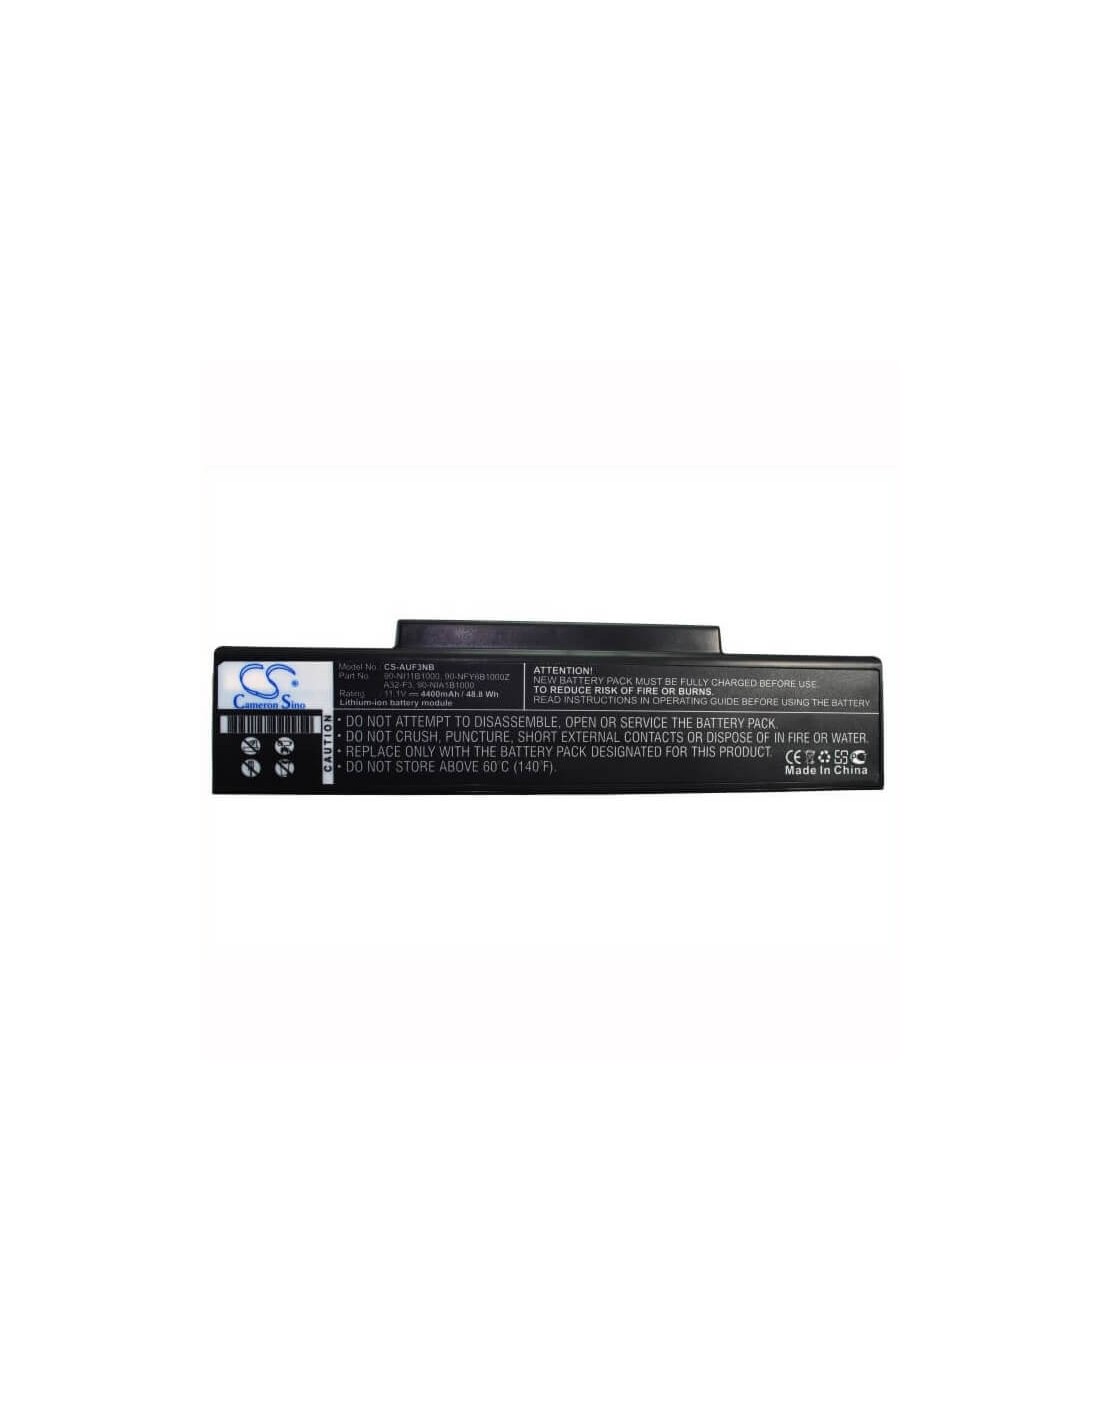 Black Battery for Advent 7093, Qt5500 11.1V, 4400mAh - 48.84Wh